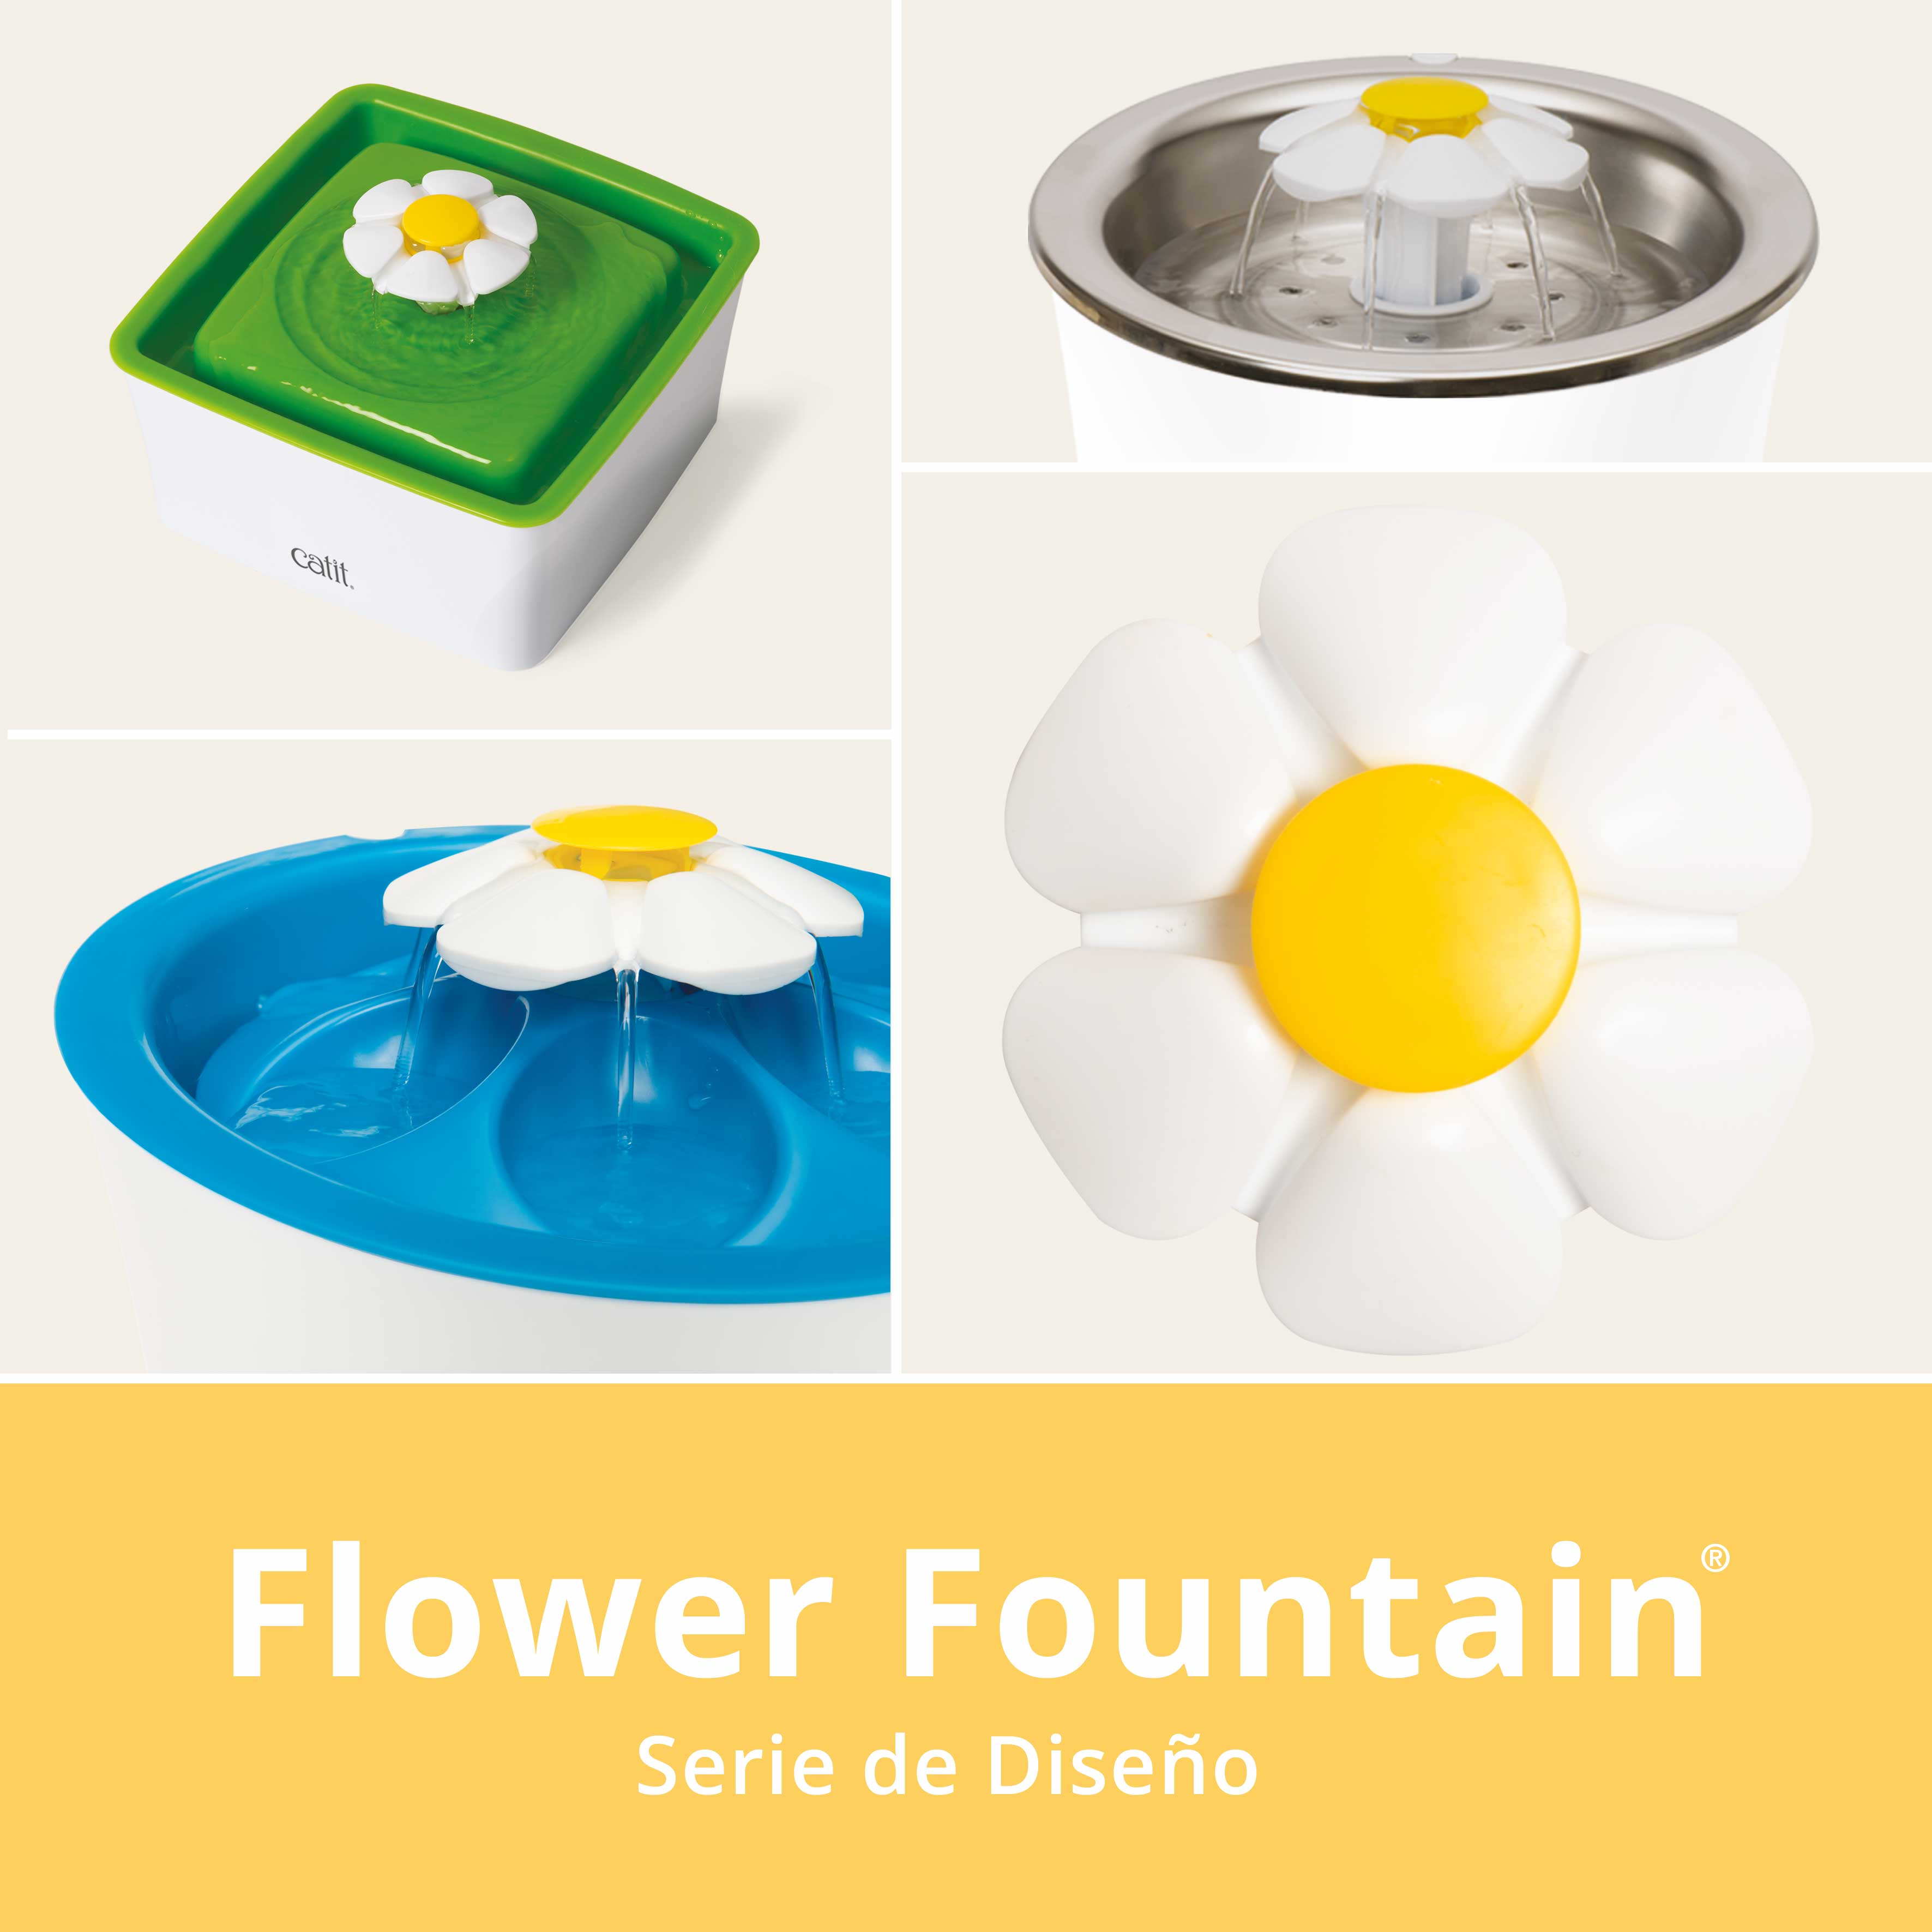 Serie de Diseño Catit Flower Fountain